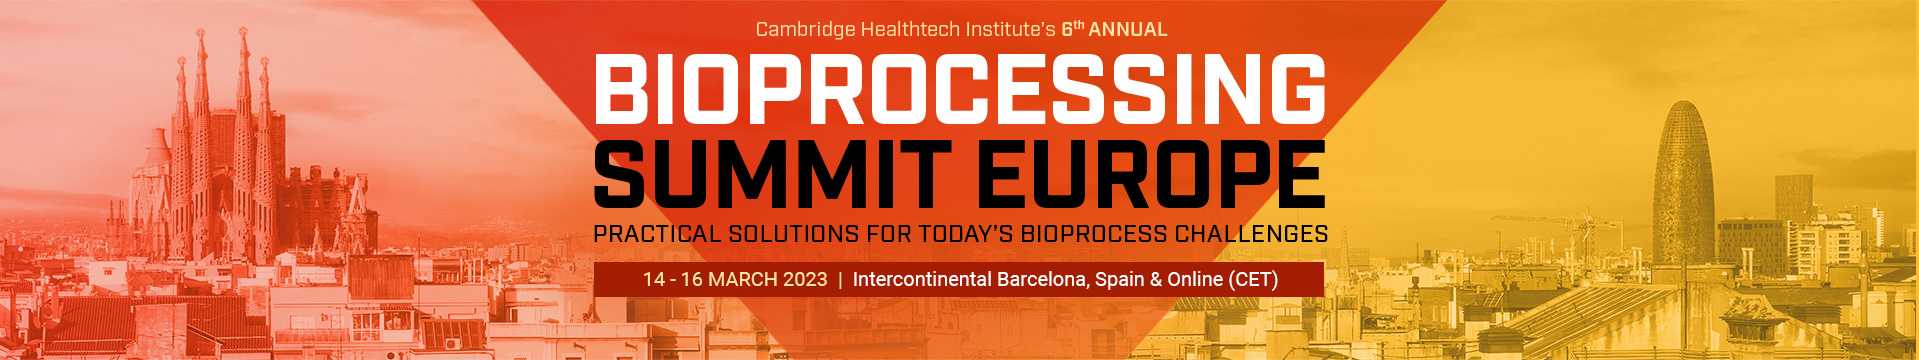 Bioprocessing Summit Europe, Barcelona, PIN-08004, Barcelona, Spain,Spain